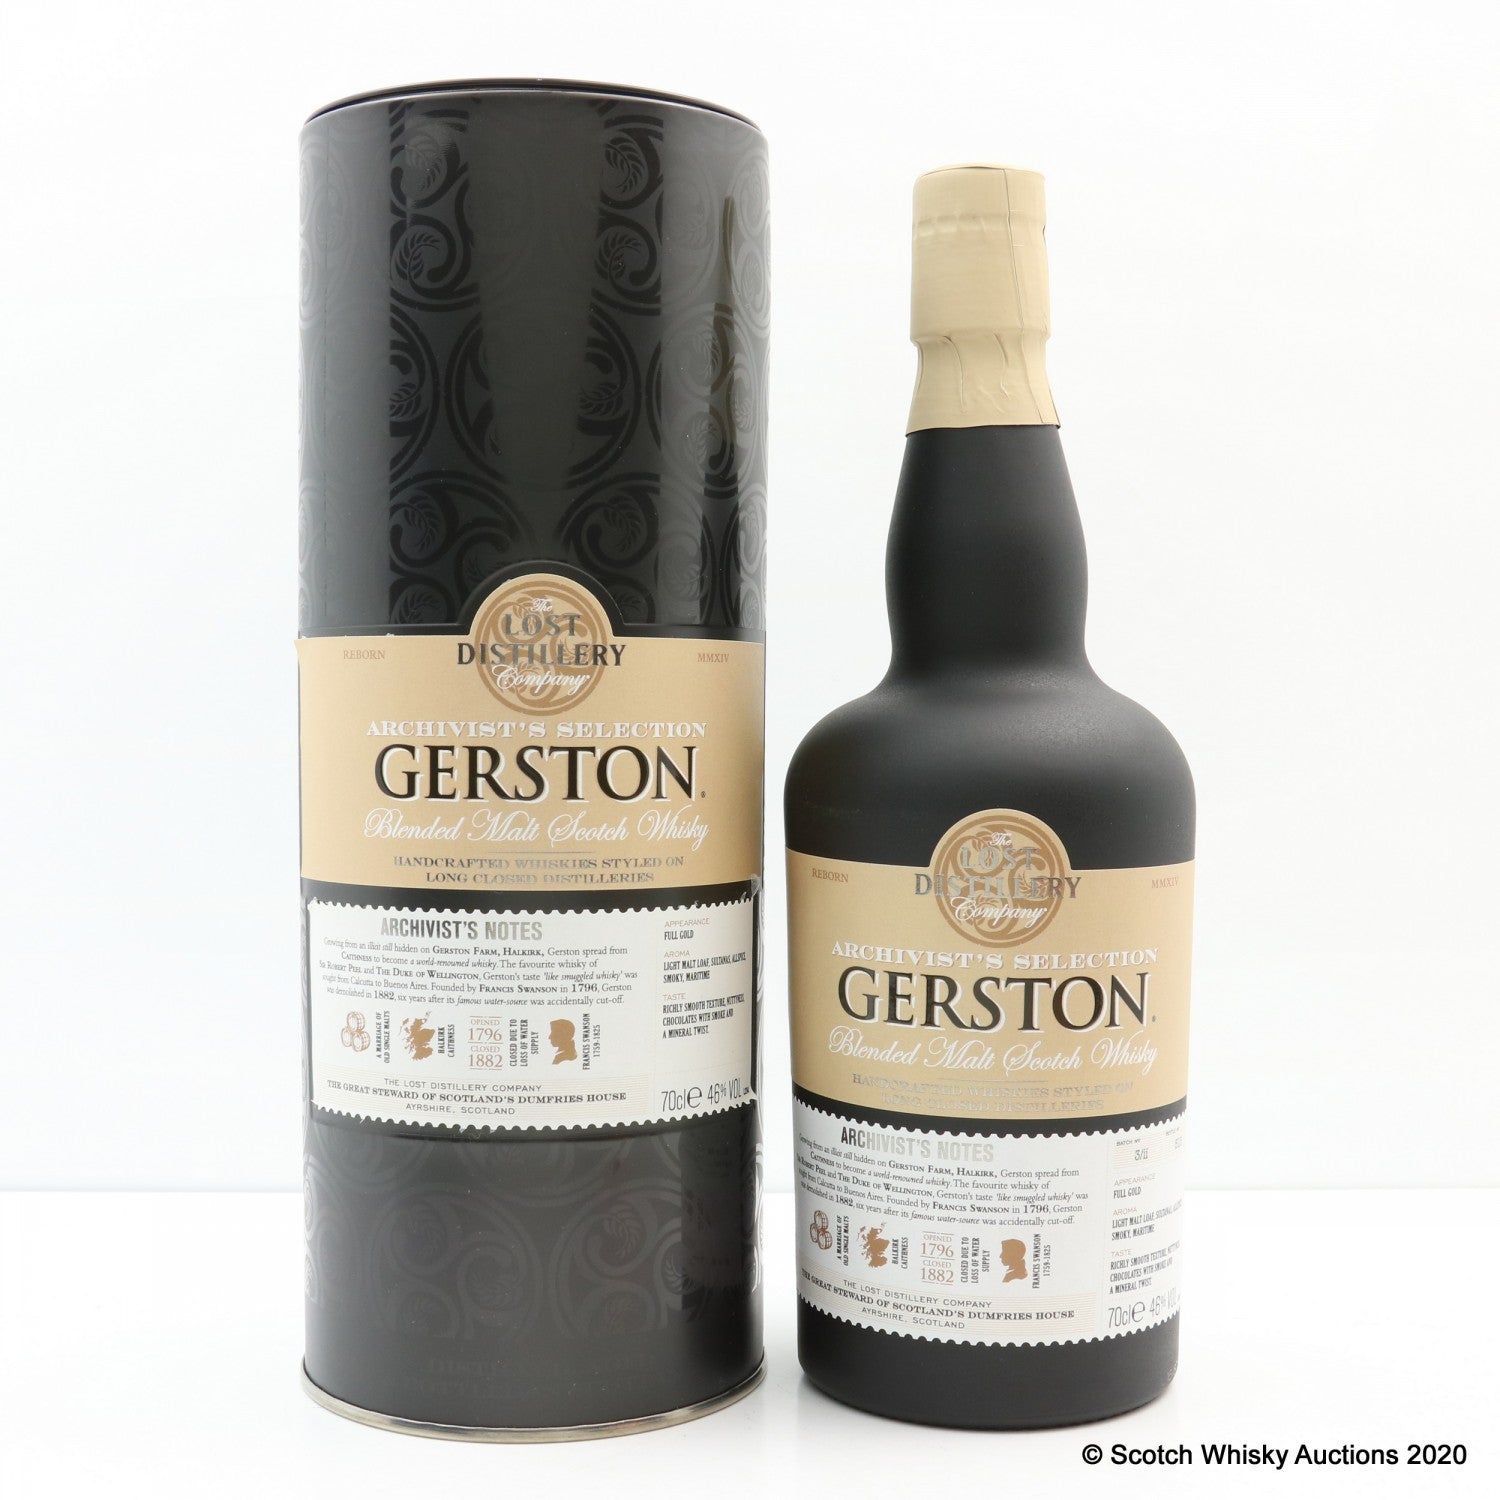 The Lost Distillery - Gerston 'Archivist' Whisky